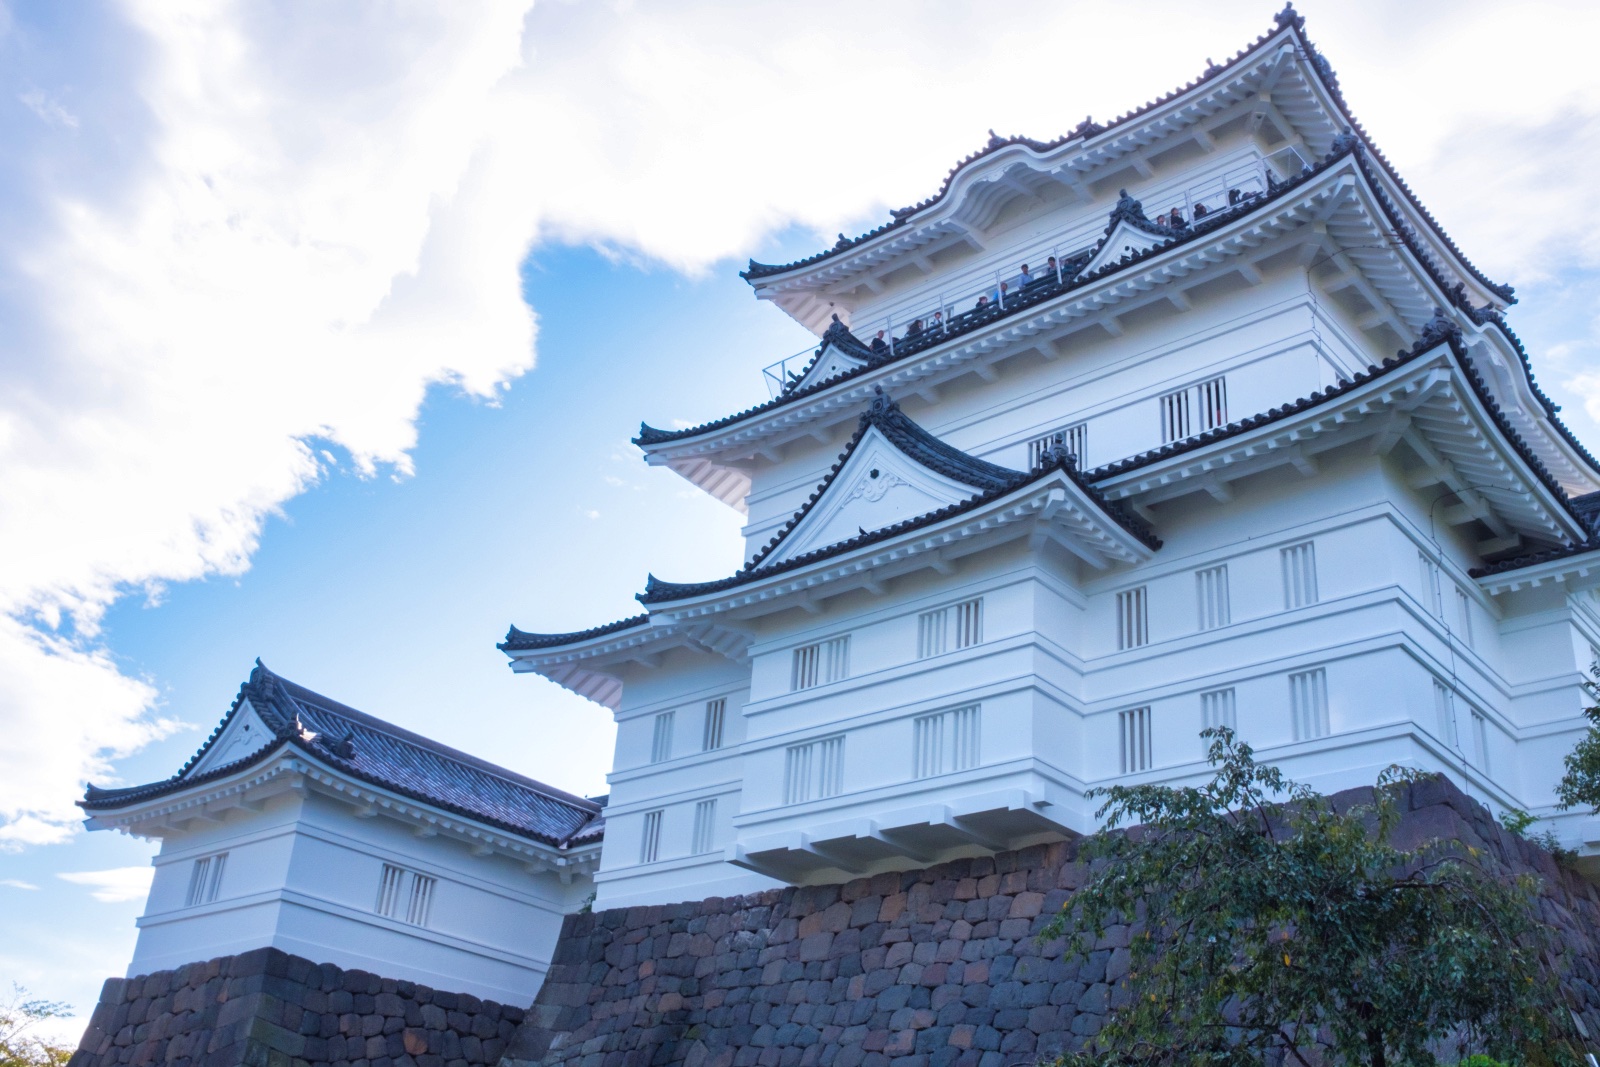 9 – Odawara Castle (小田原城), Odawara, Japan